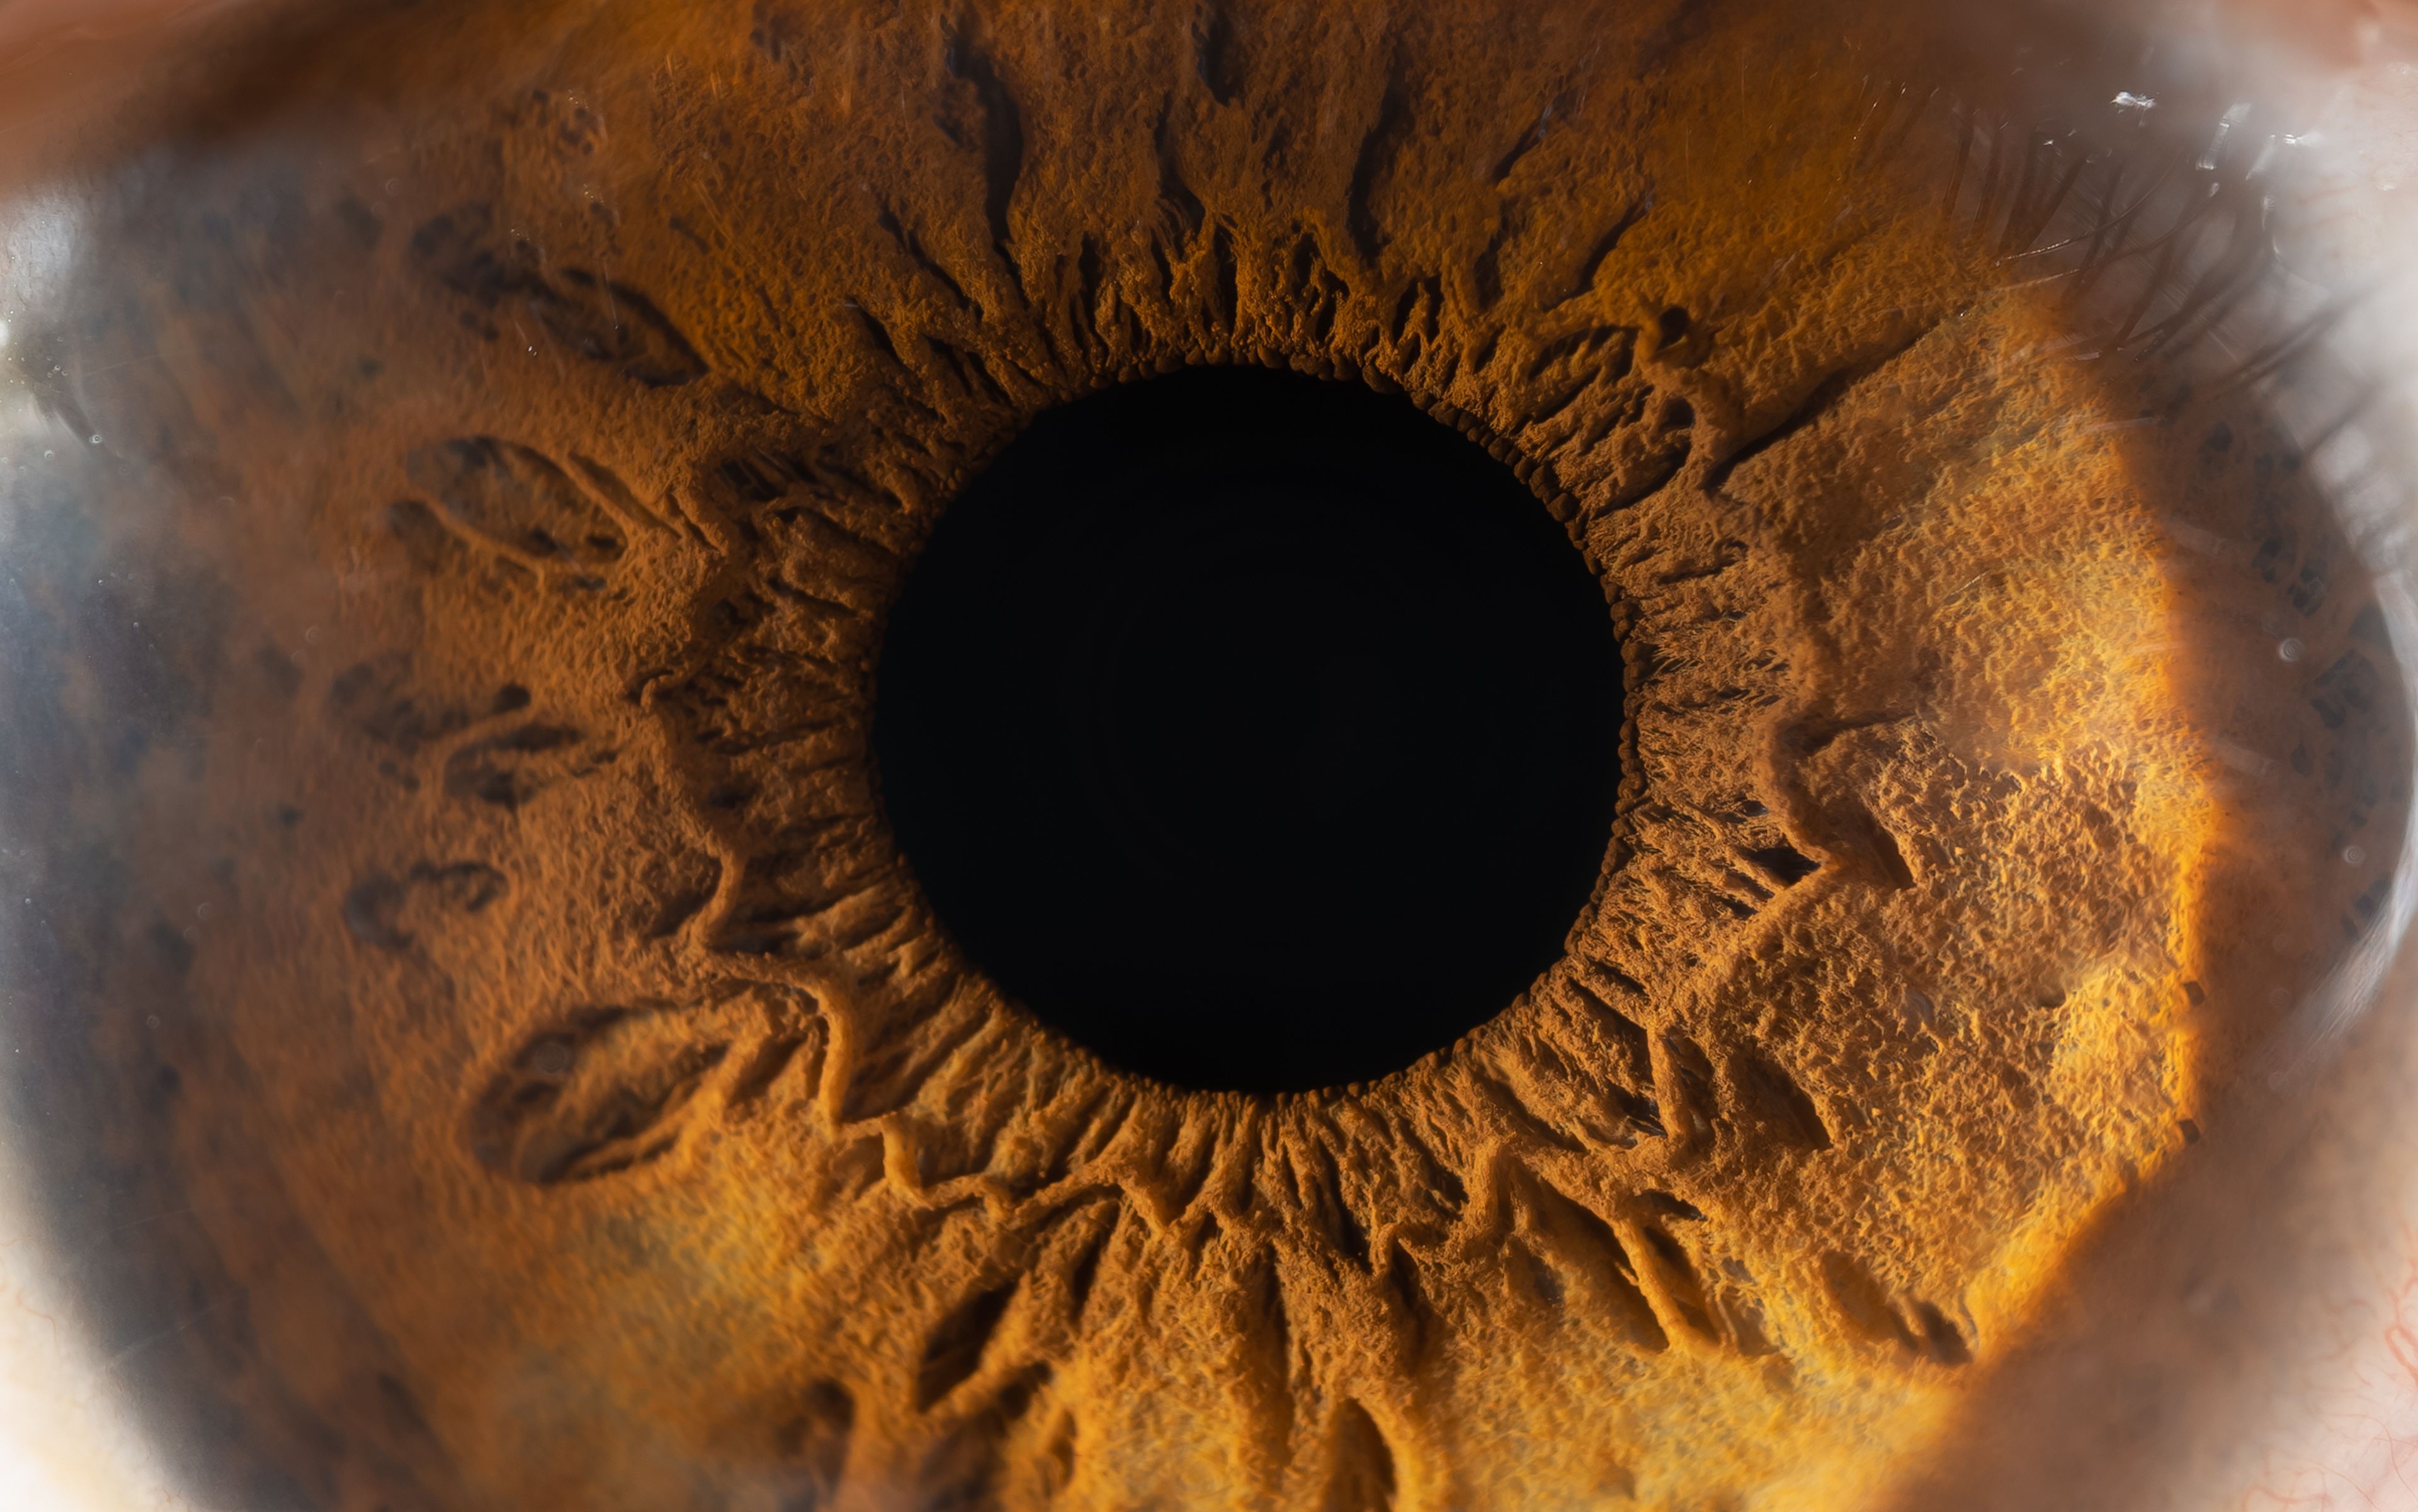 Iris del ojo humano.